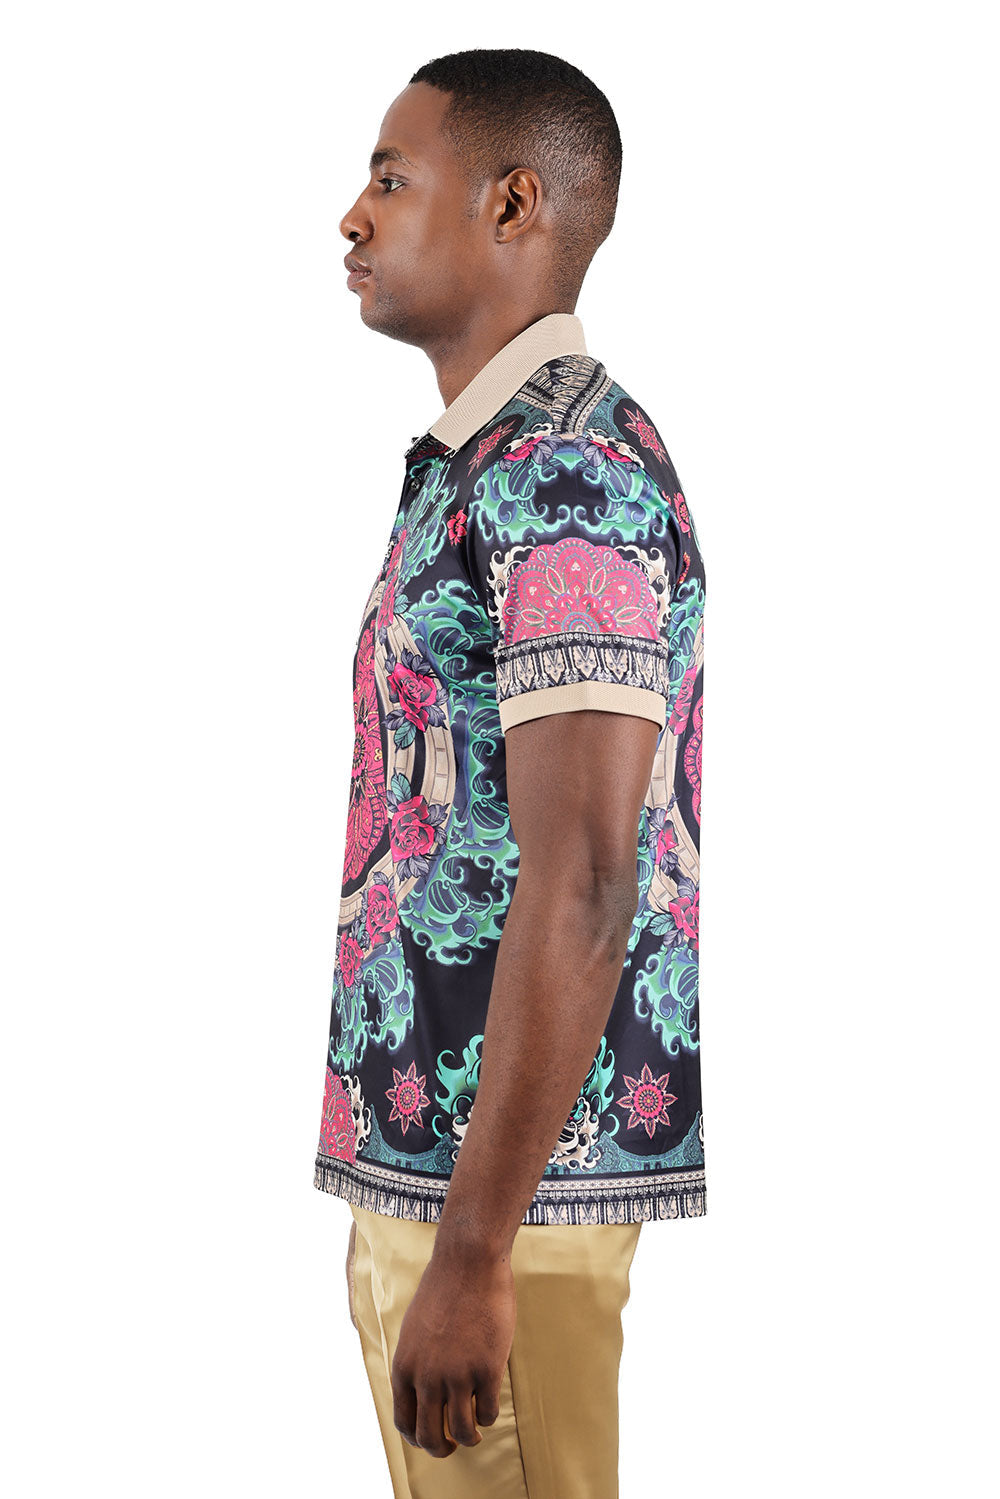 Barabas Men's Floral Circular Prints Graphic Tee Polo Shirts 3PSP13 Multicolor